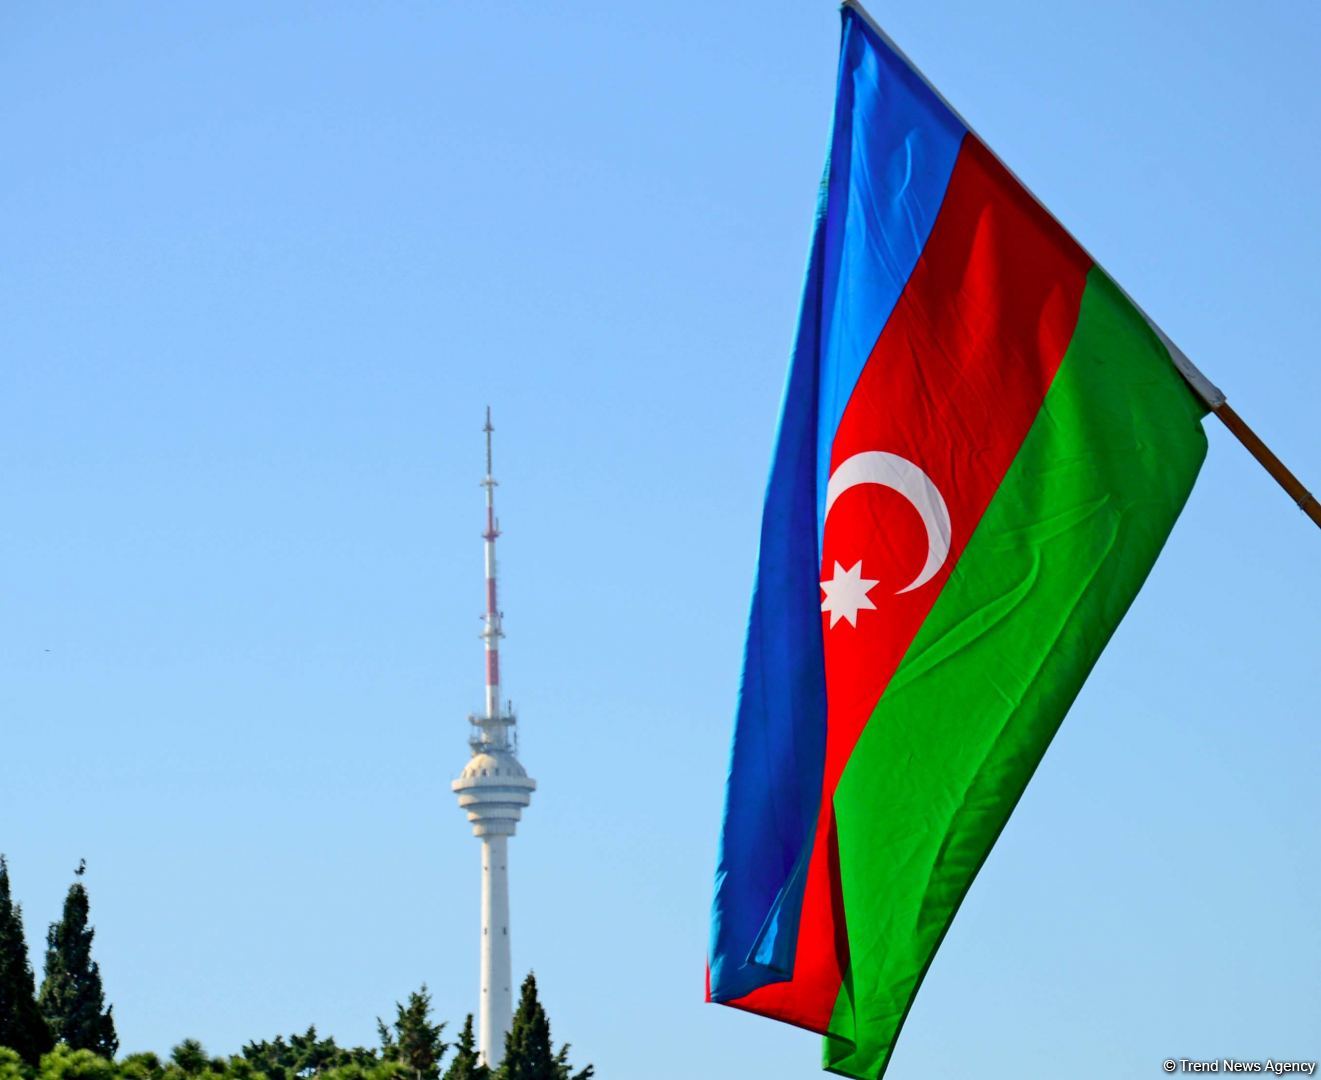 Azerbaijan leads in South Caucasus in terms of military power